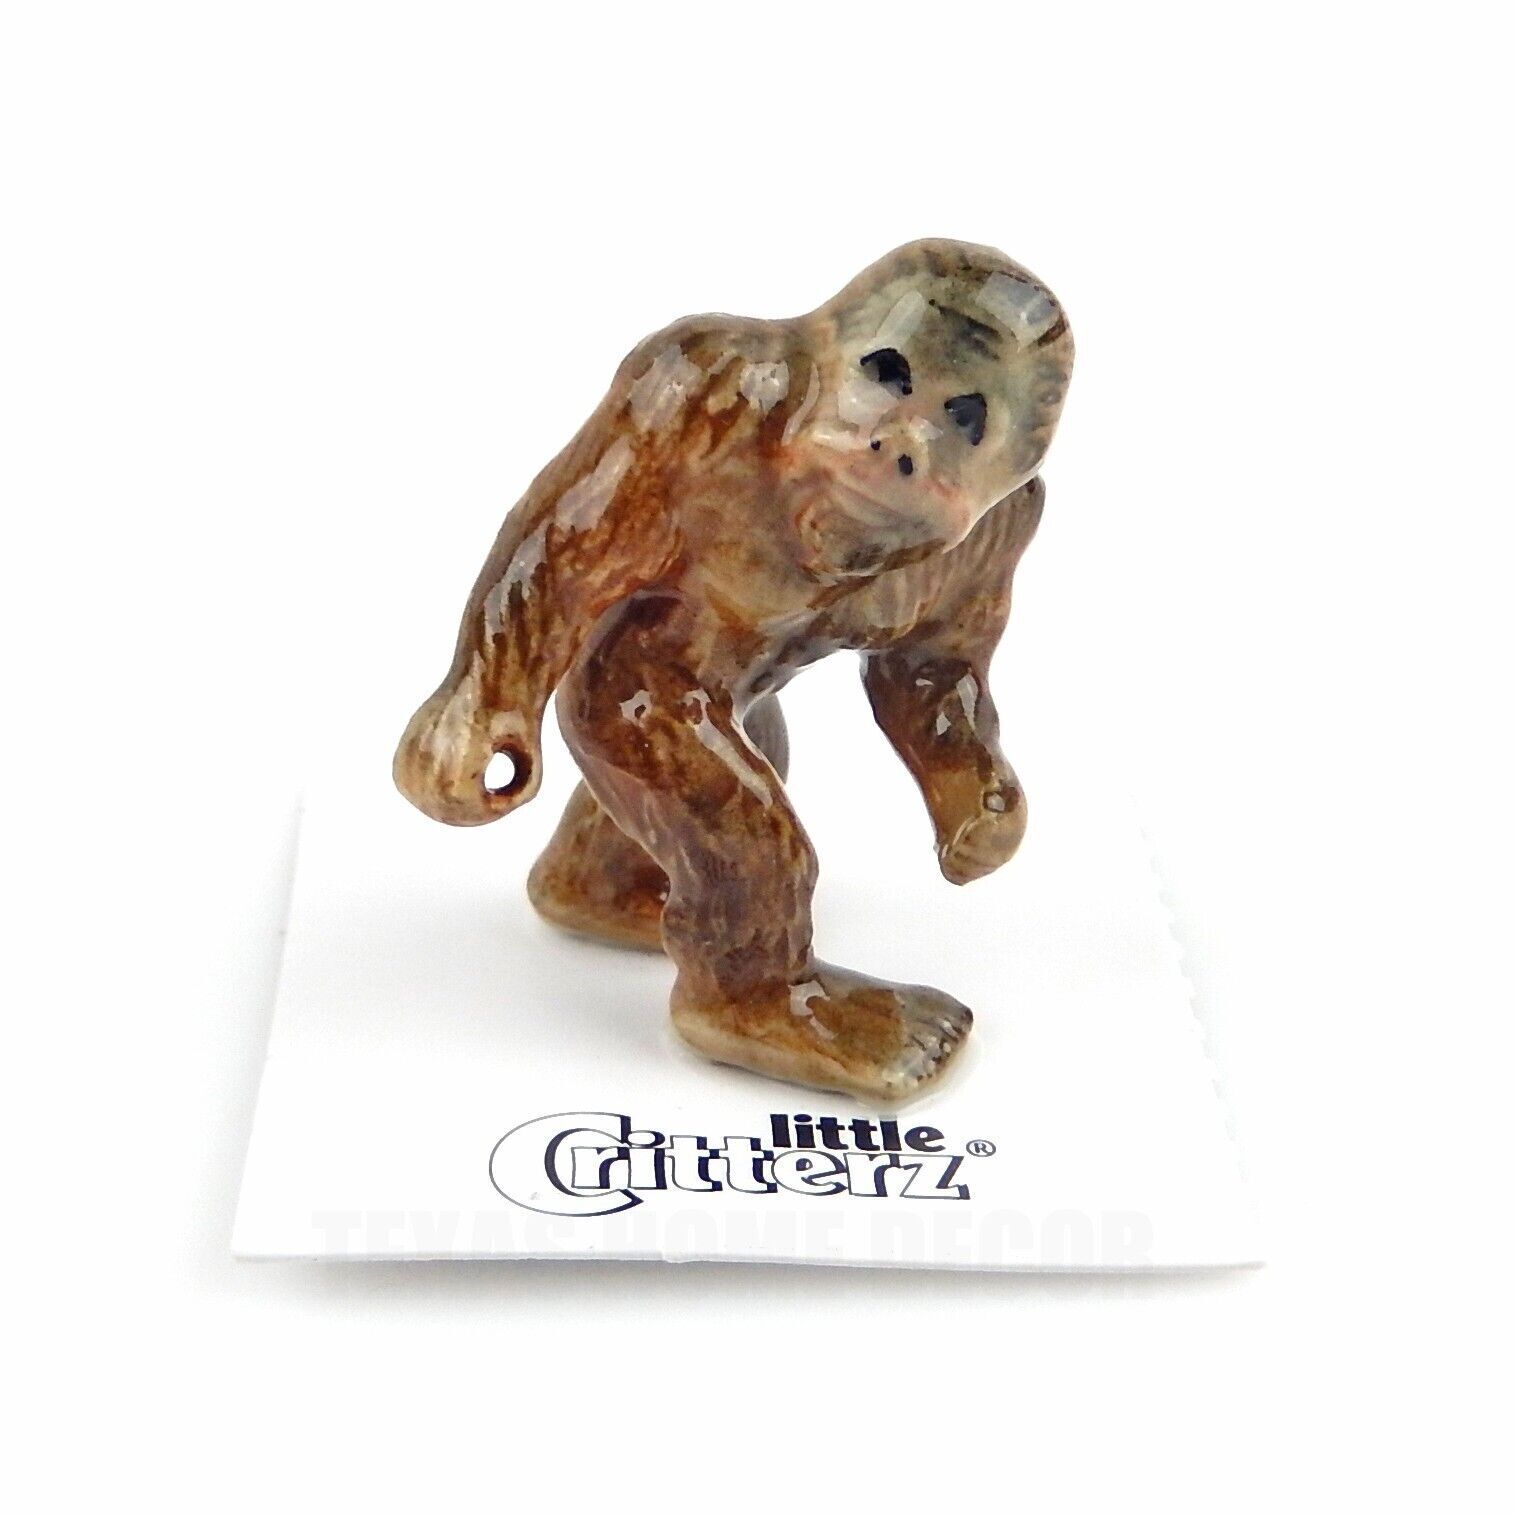 Little Critterz Miniature Collectors Bigfoot Sasquatch Ape Porcelain Figurine